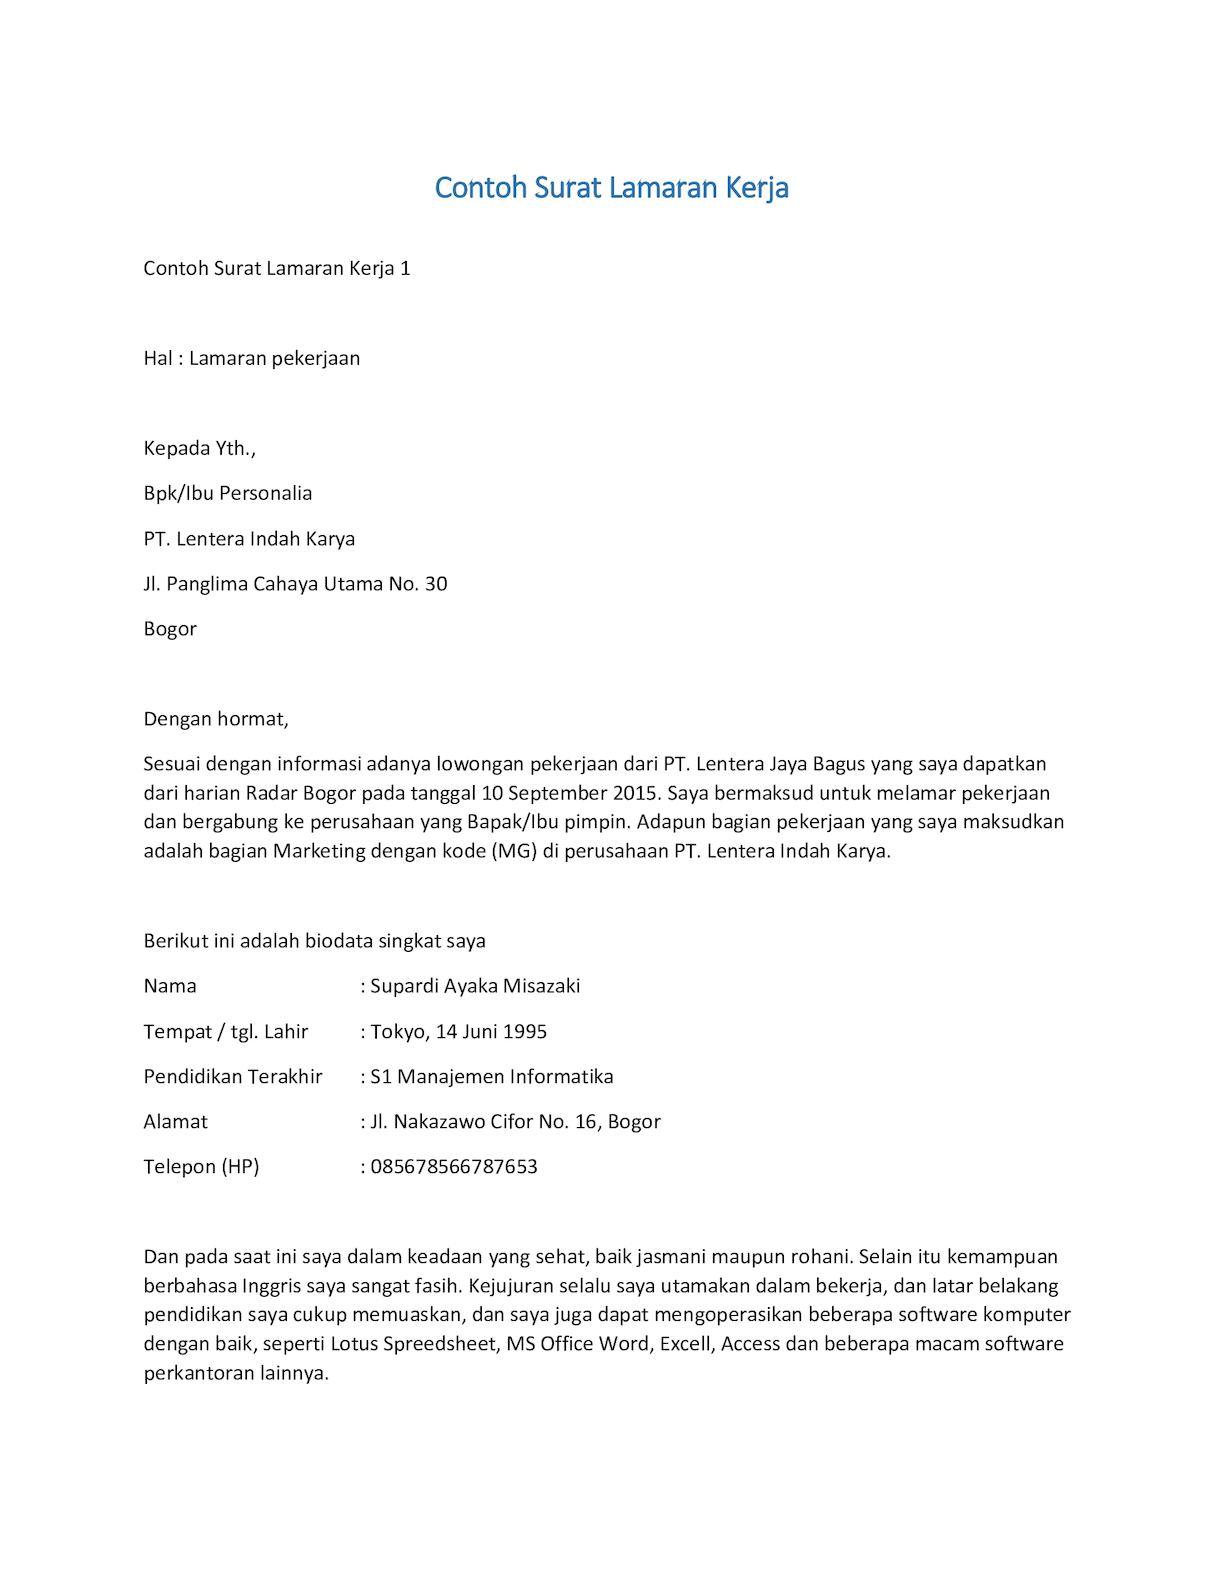 Contoh Surat Lamaran Kerja Untuk Pt Epson Gawe Cv